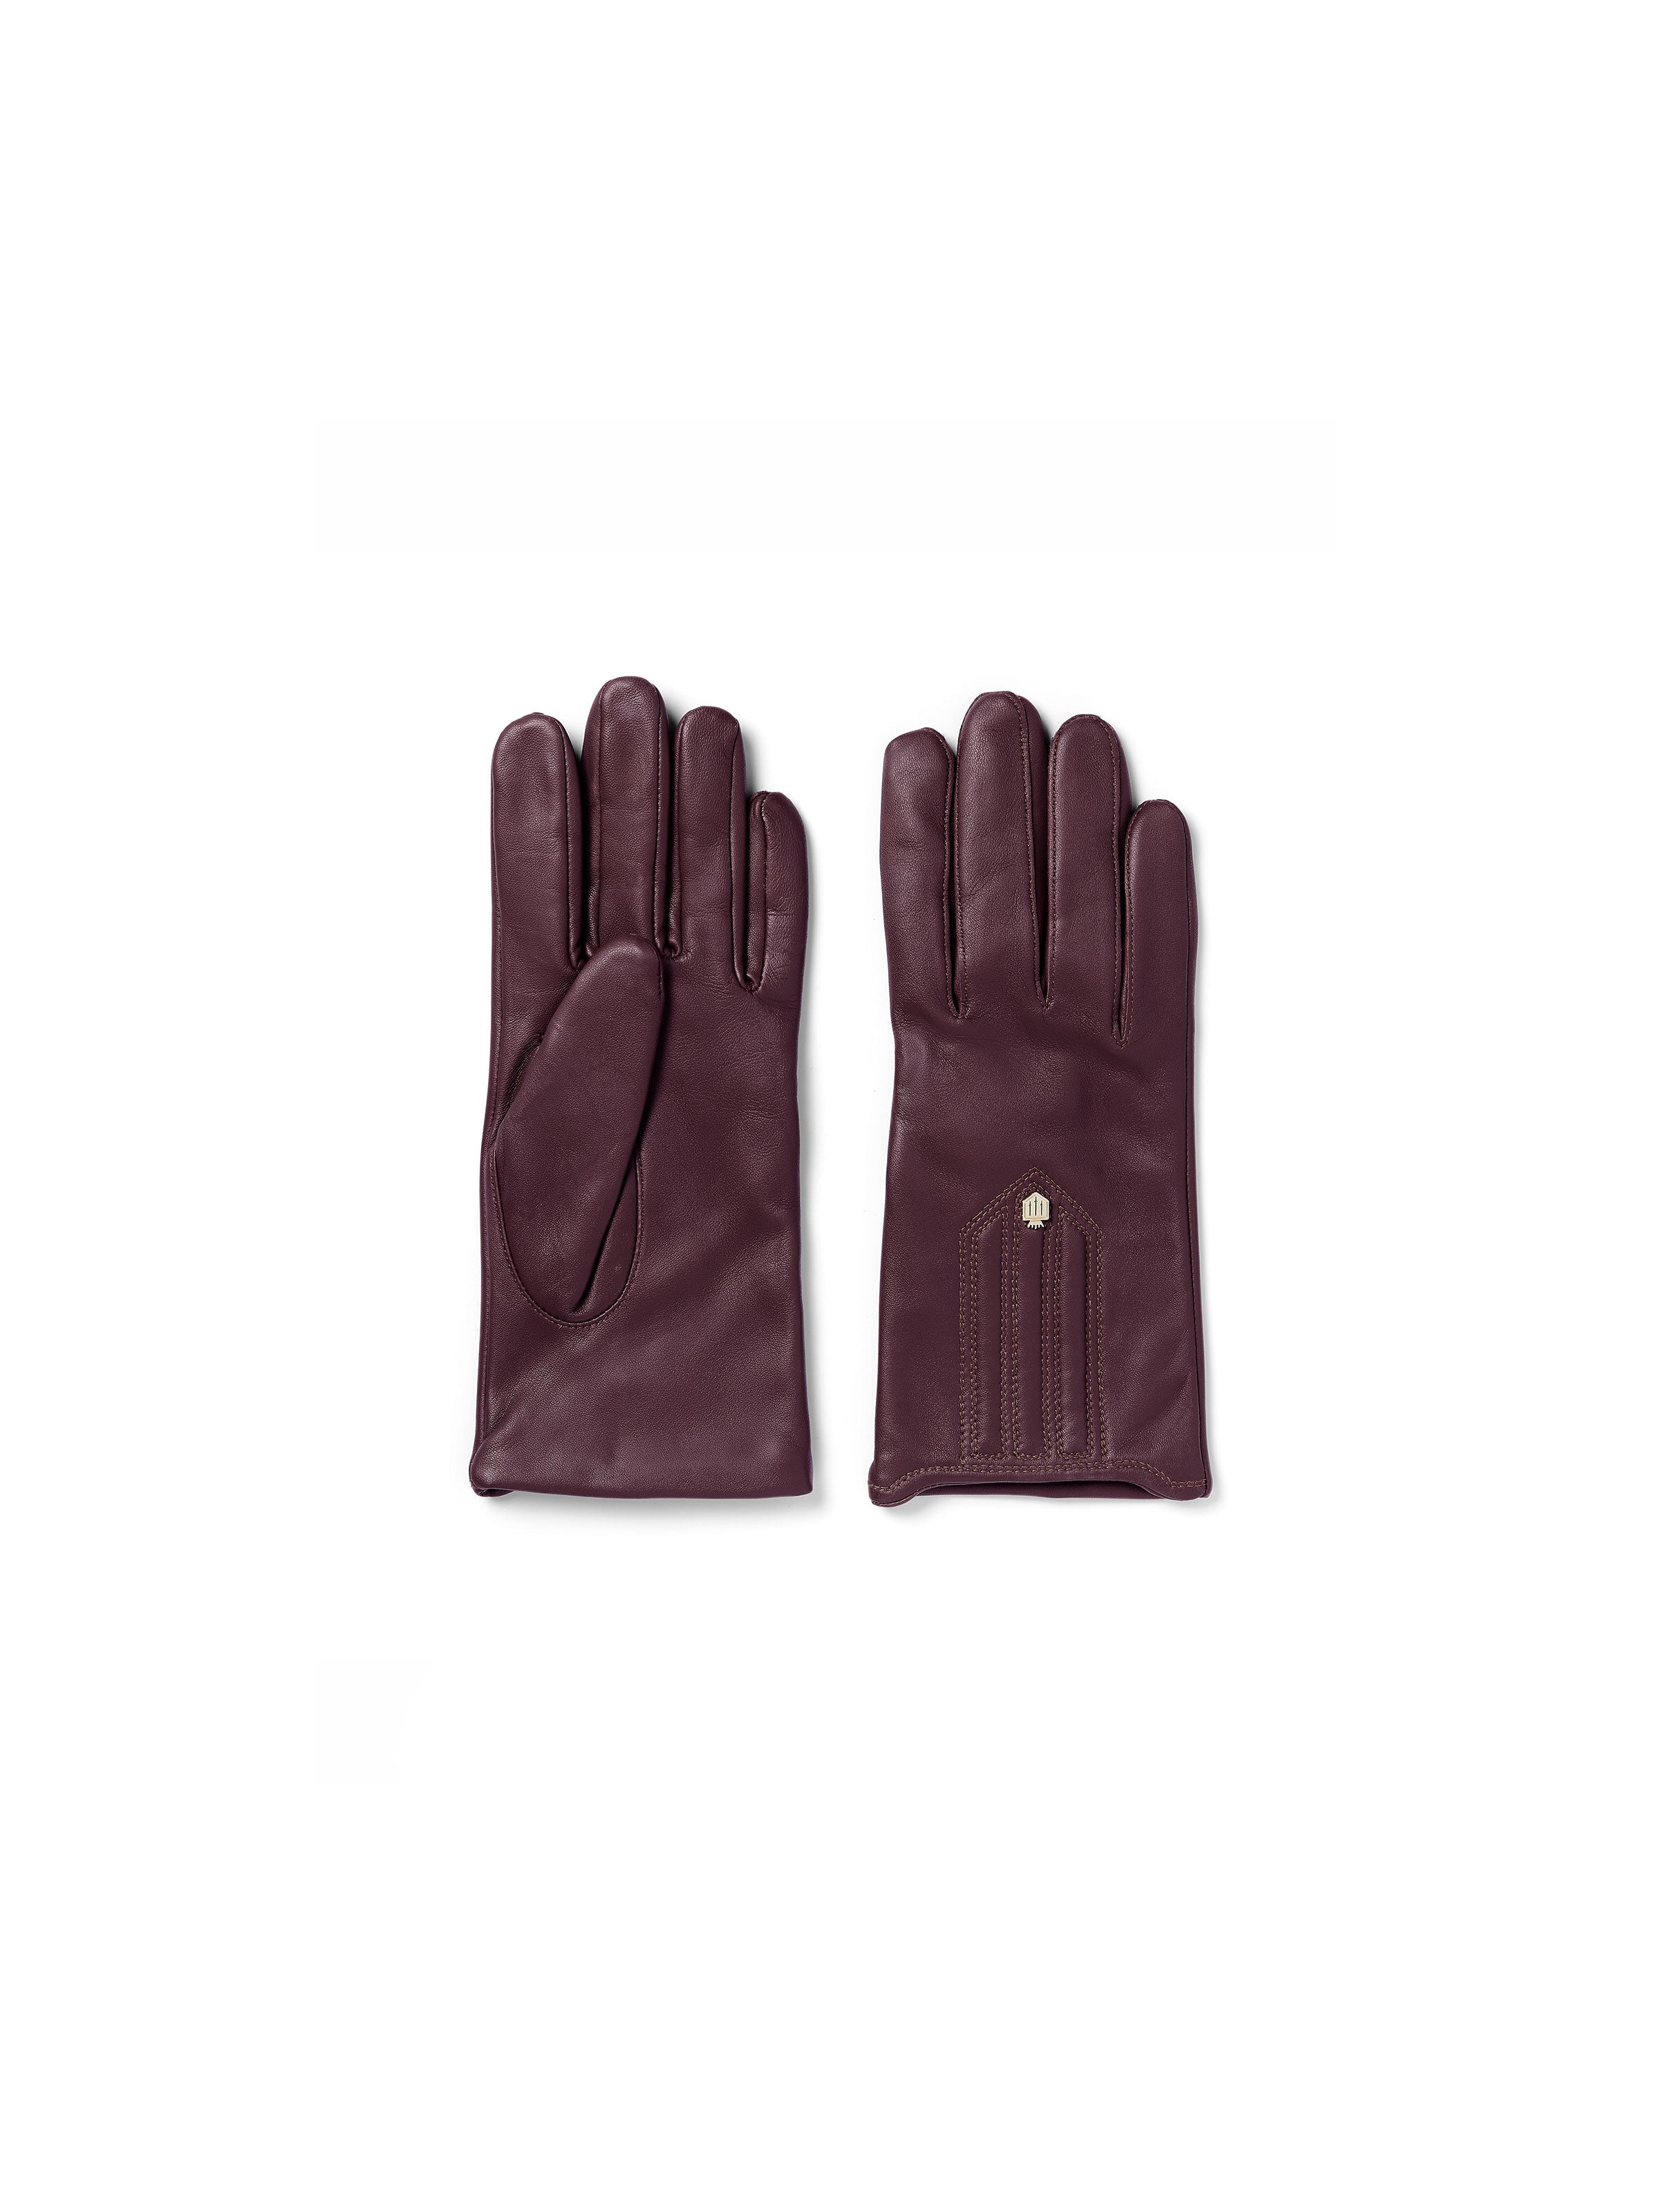 Signature Gloves - Women's Gloves in Plum Leather | Fairfax & Favor